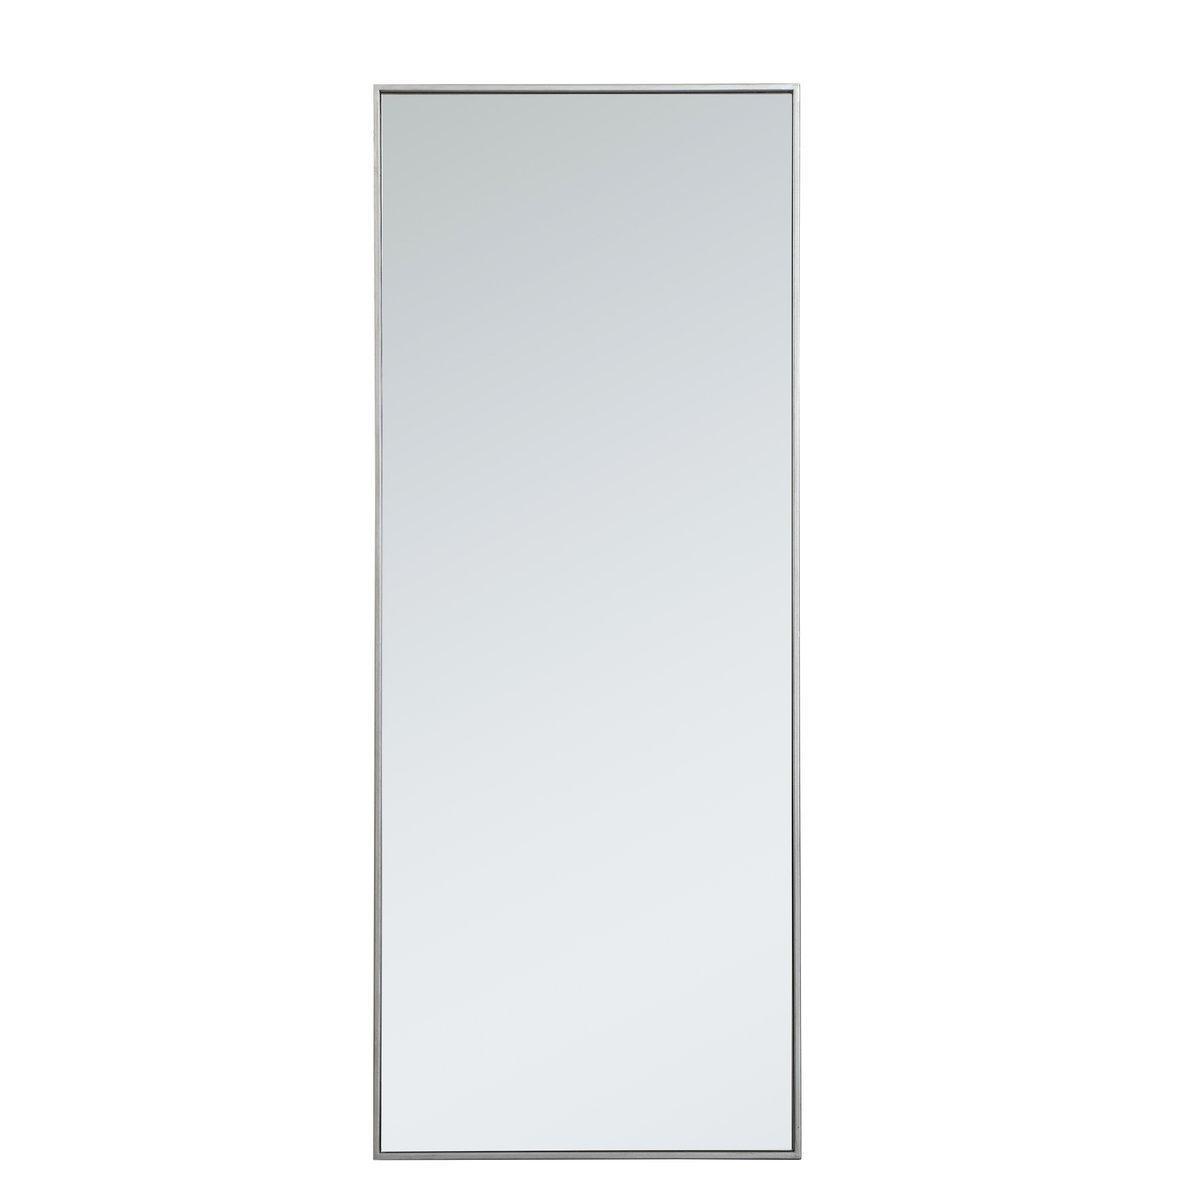 MW22057 BA Linework Mirror - 30x48